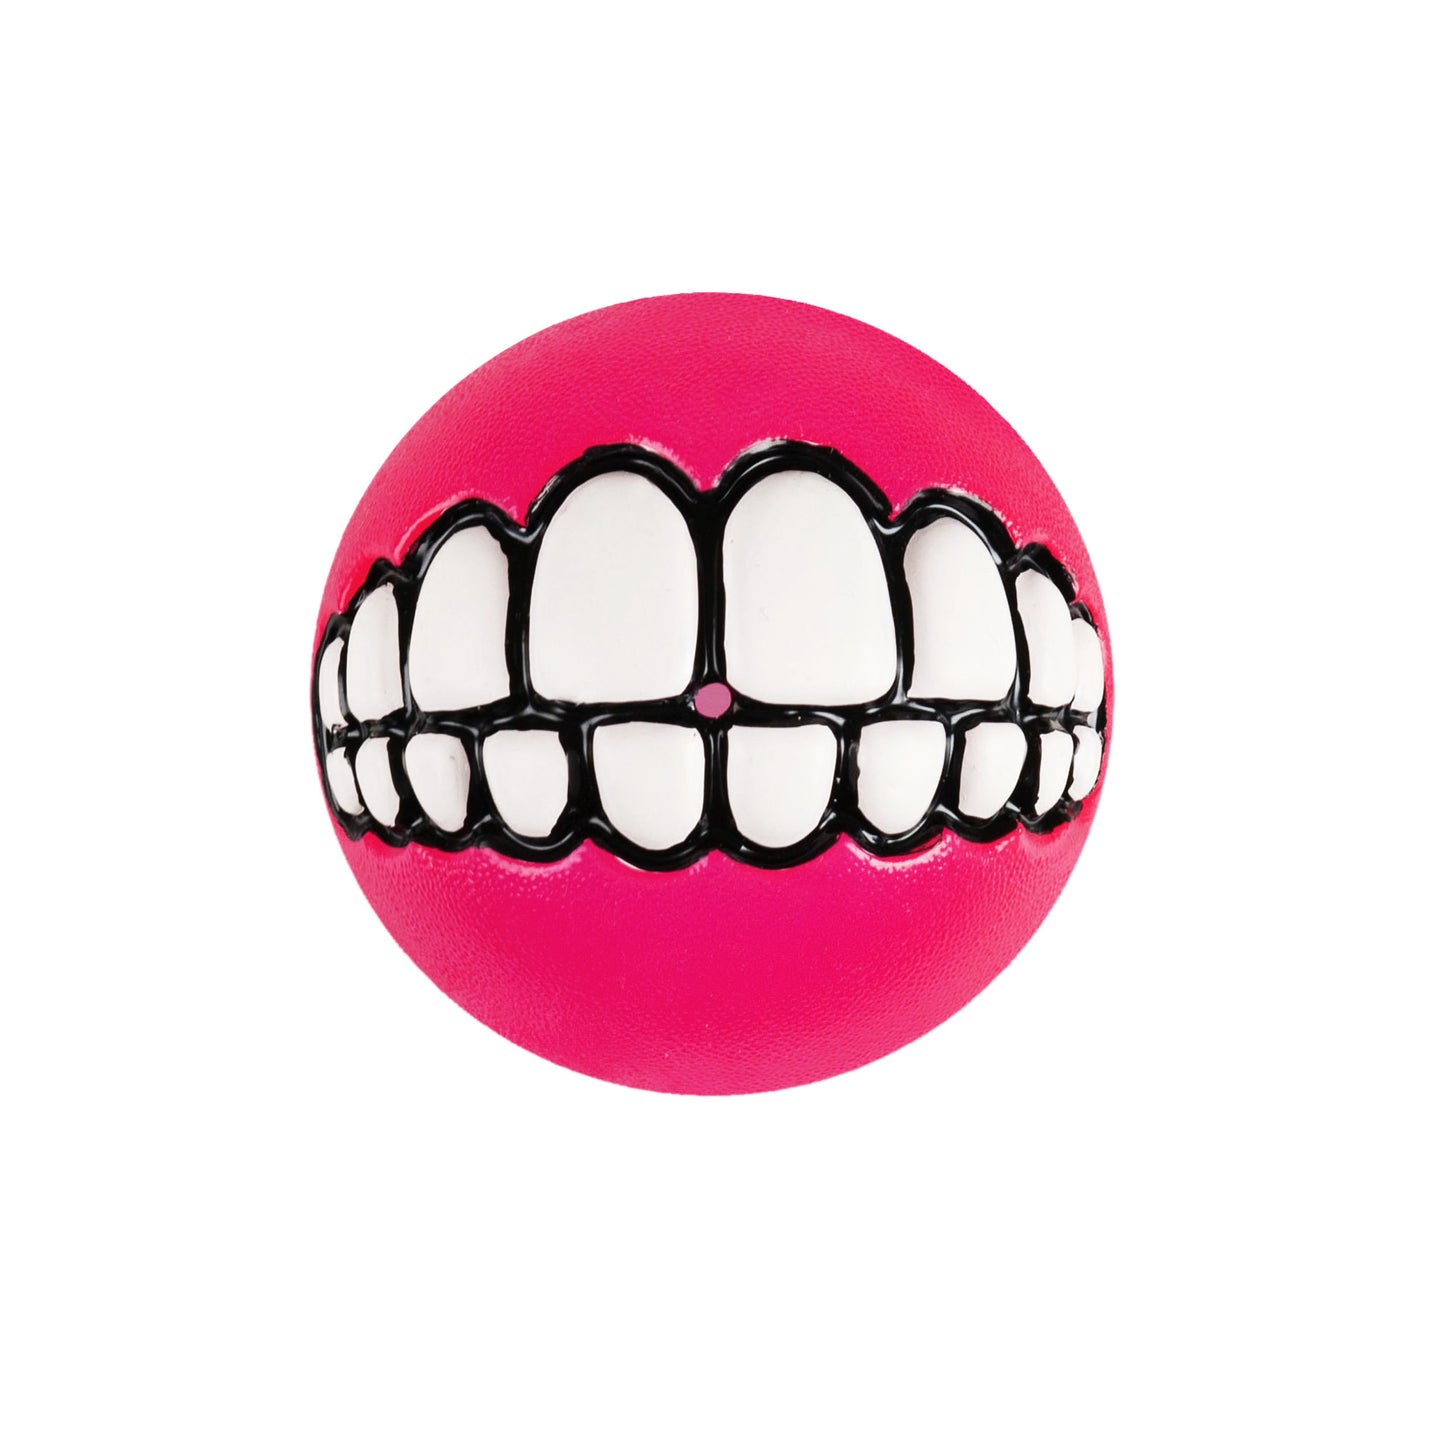 Rogz By Kong Grinz Ball With Teeth